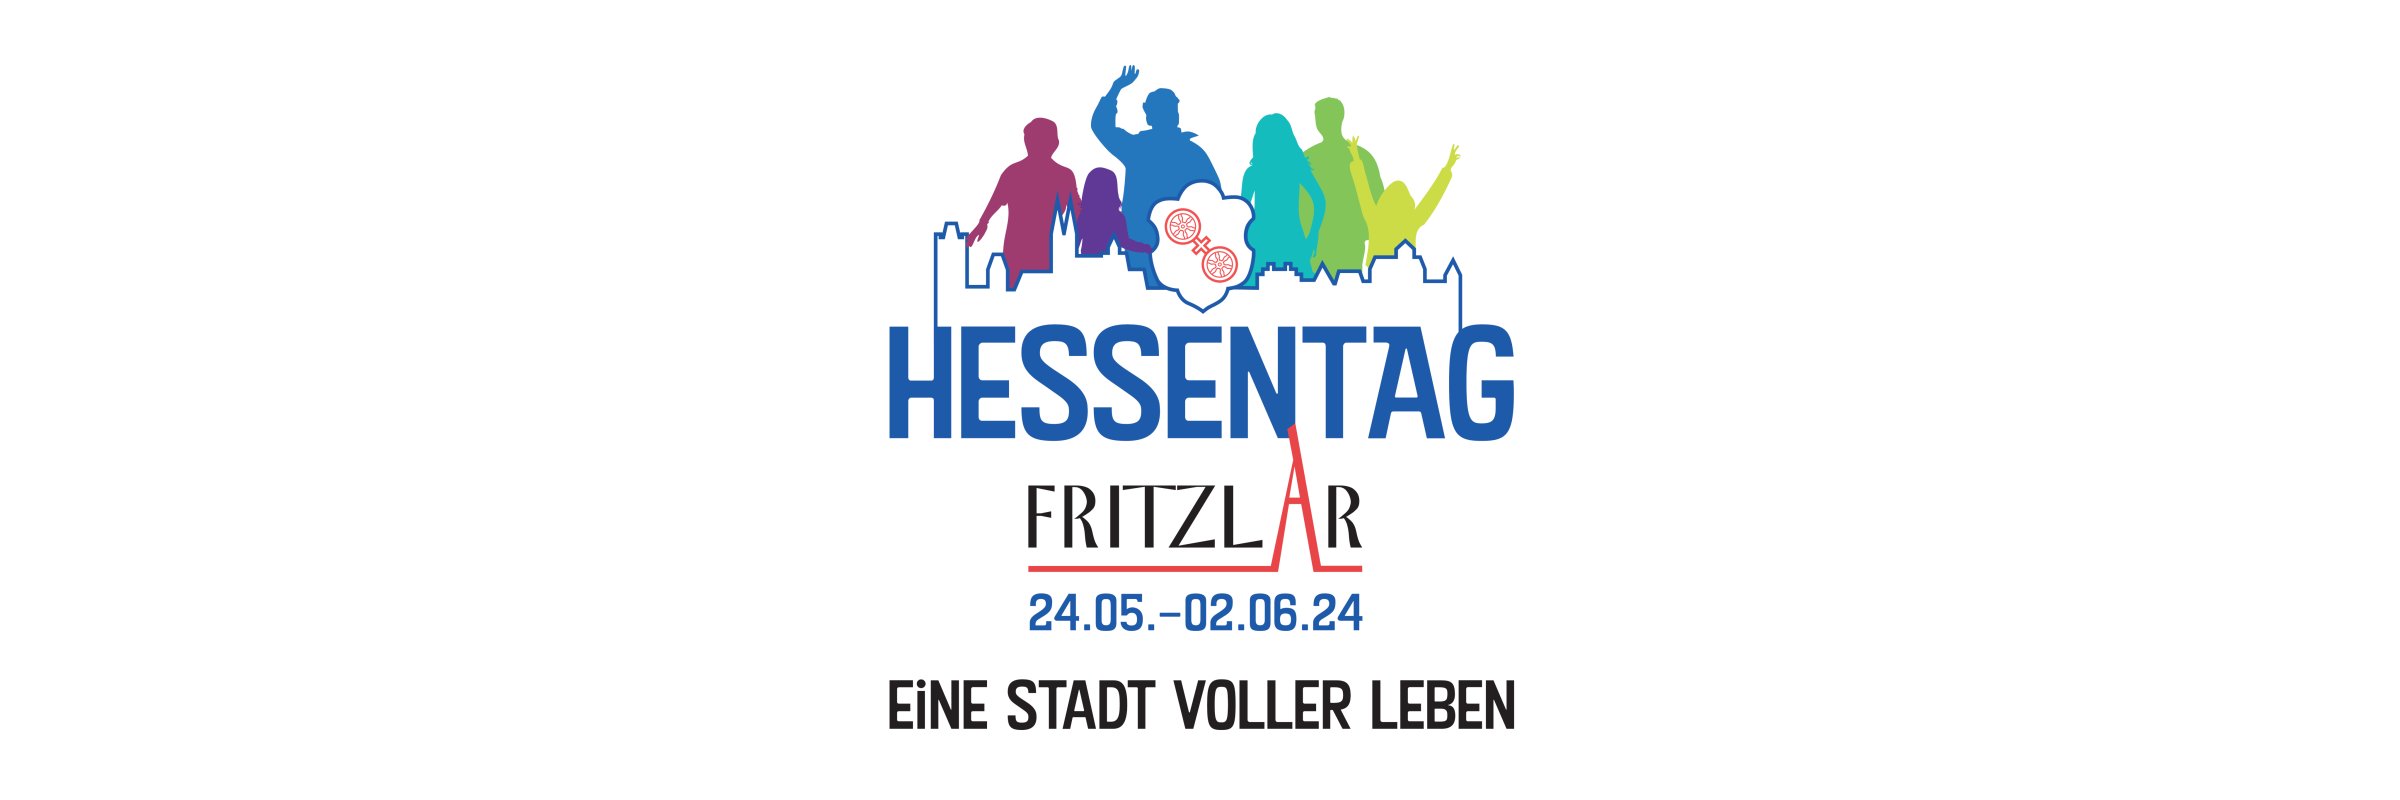 Hessentag Gemeinde Fritzlar